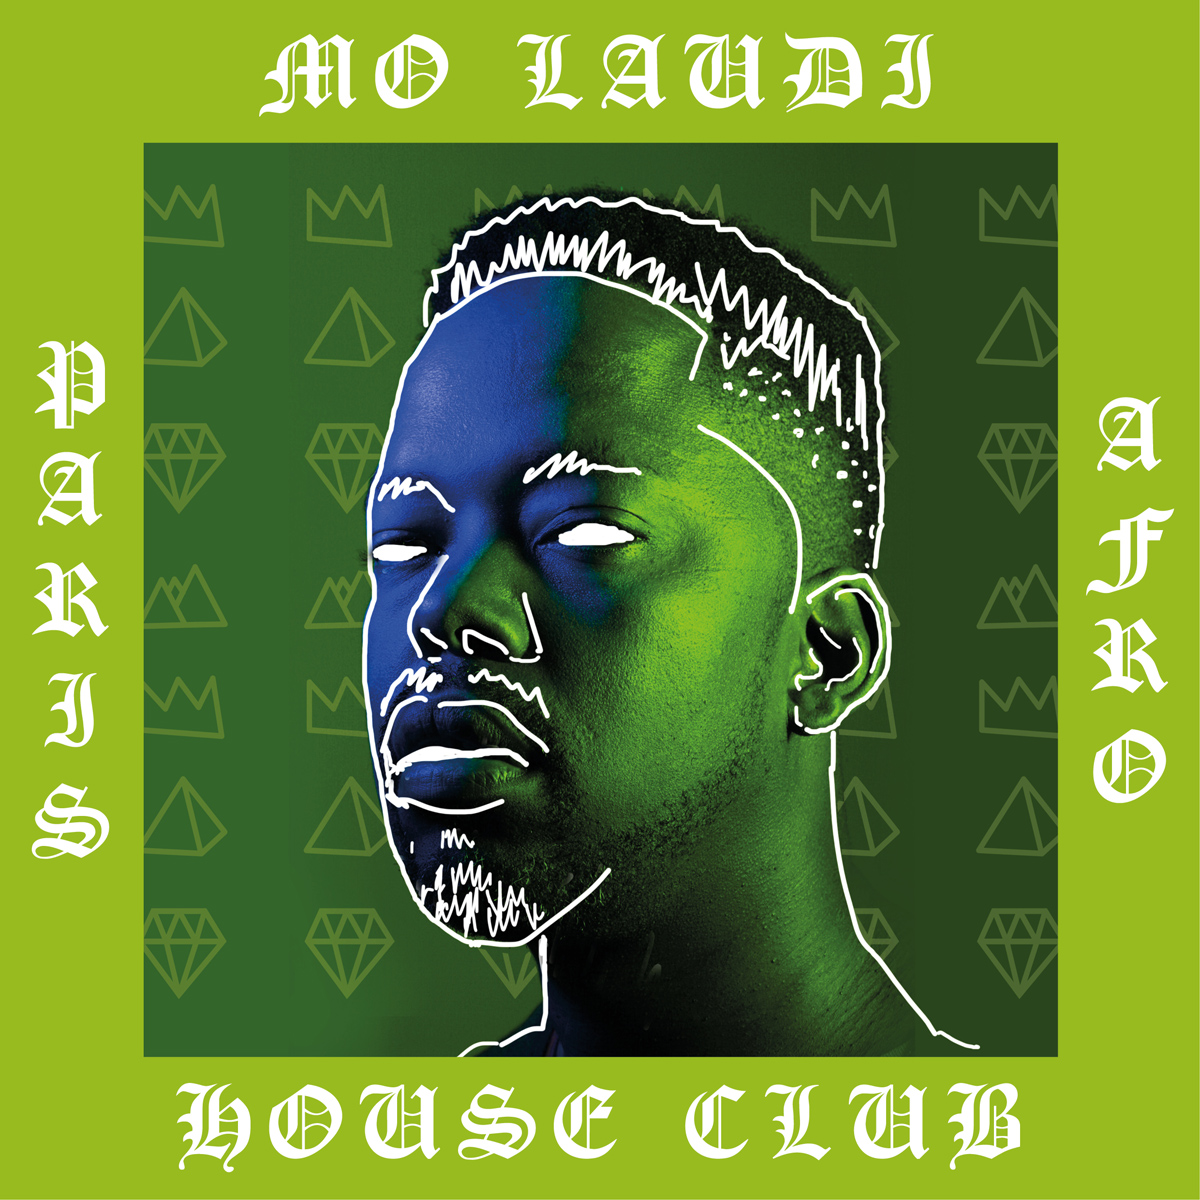 molaudi-paris-afro-house-club-cover-hi